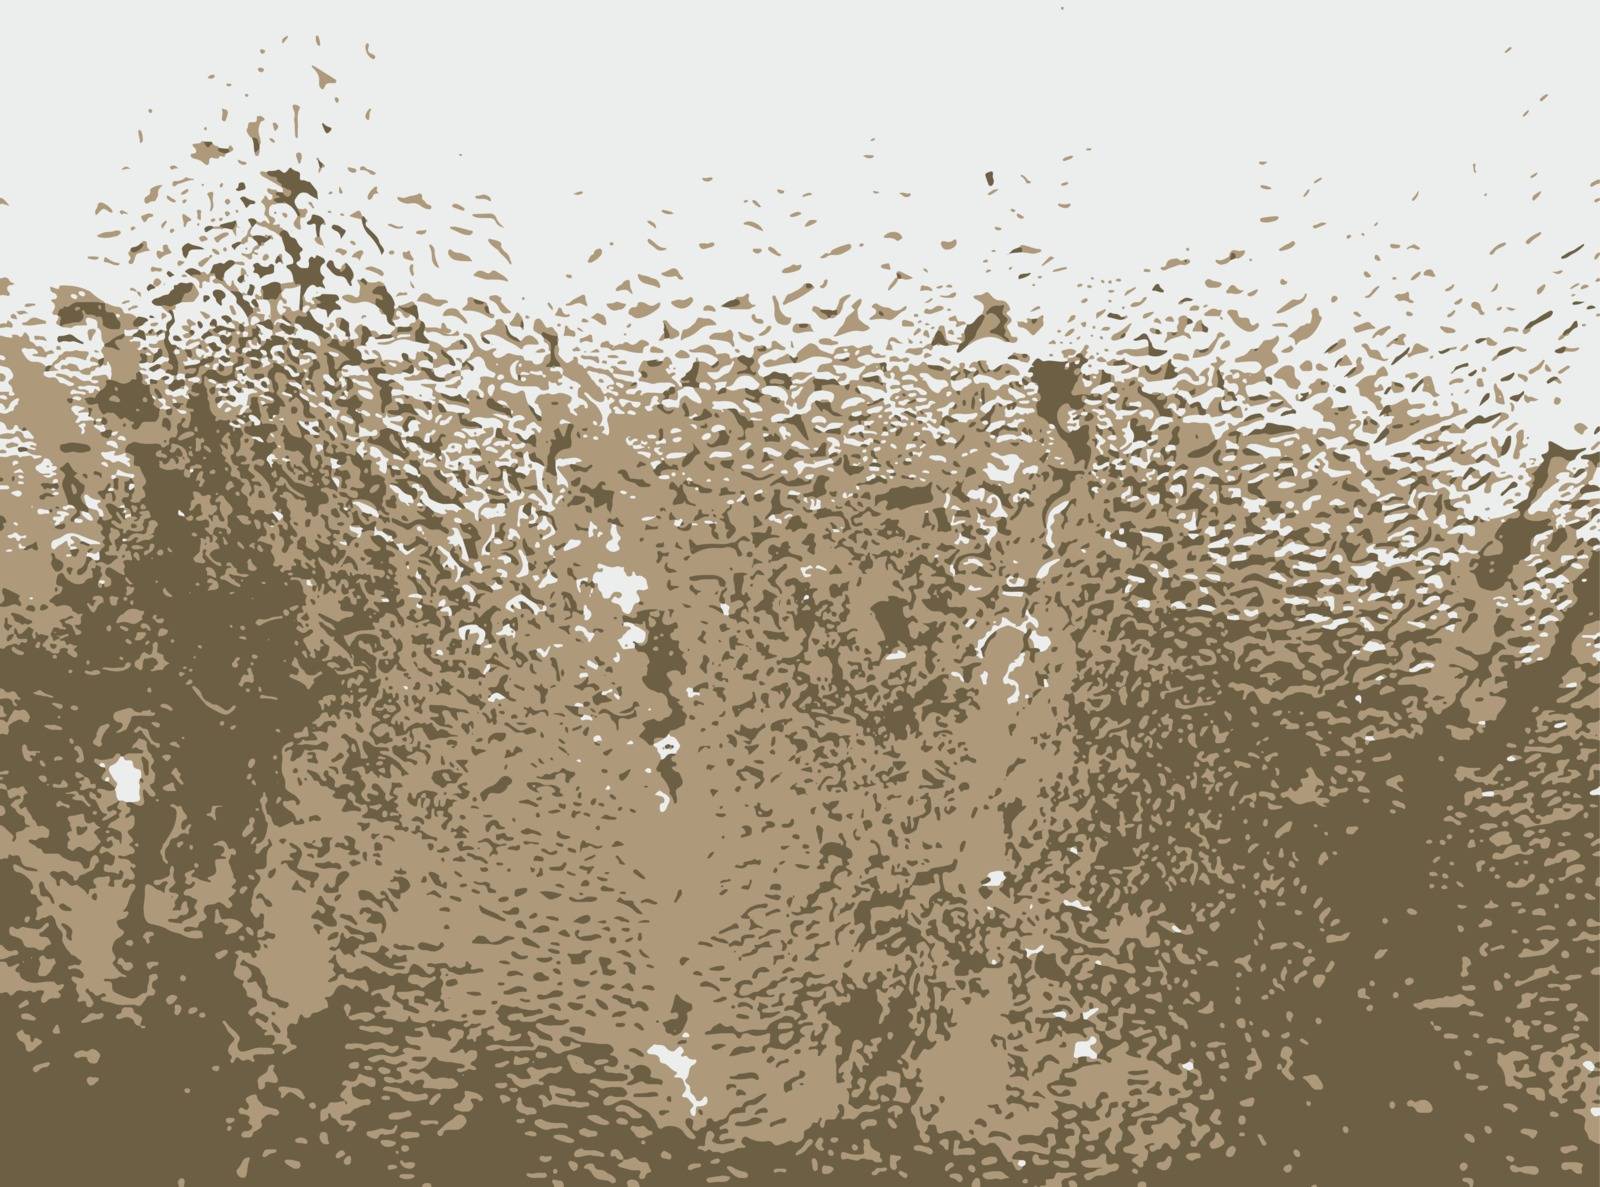 rain drops on a window by yilmazsavaskandag